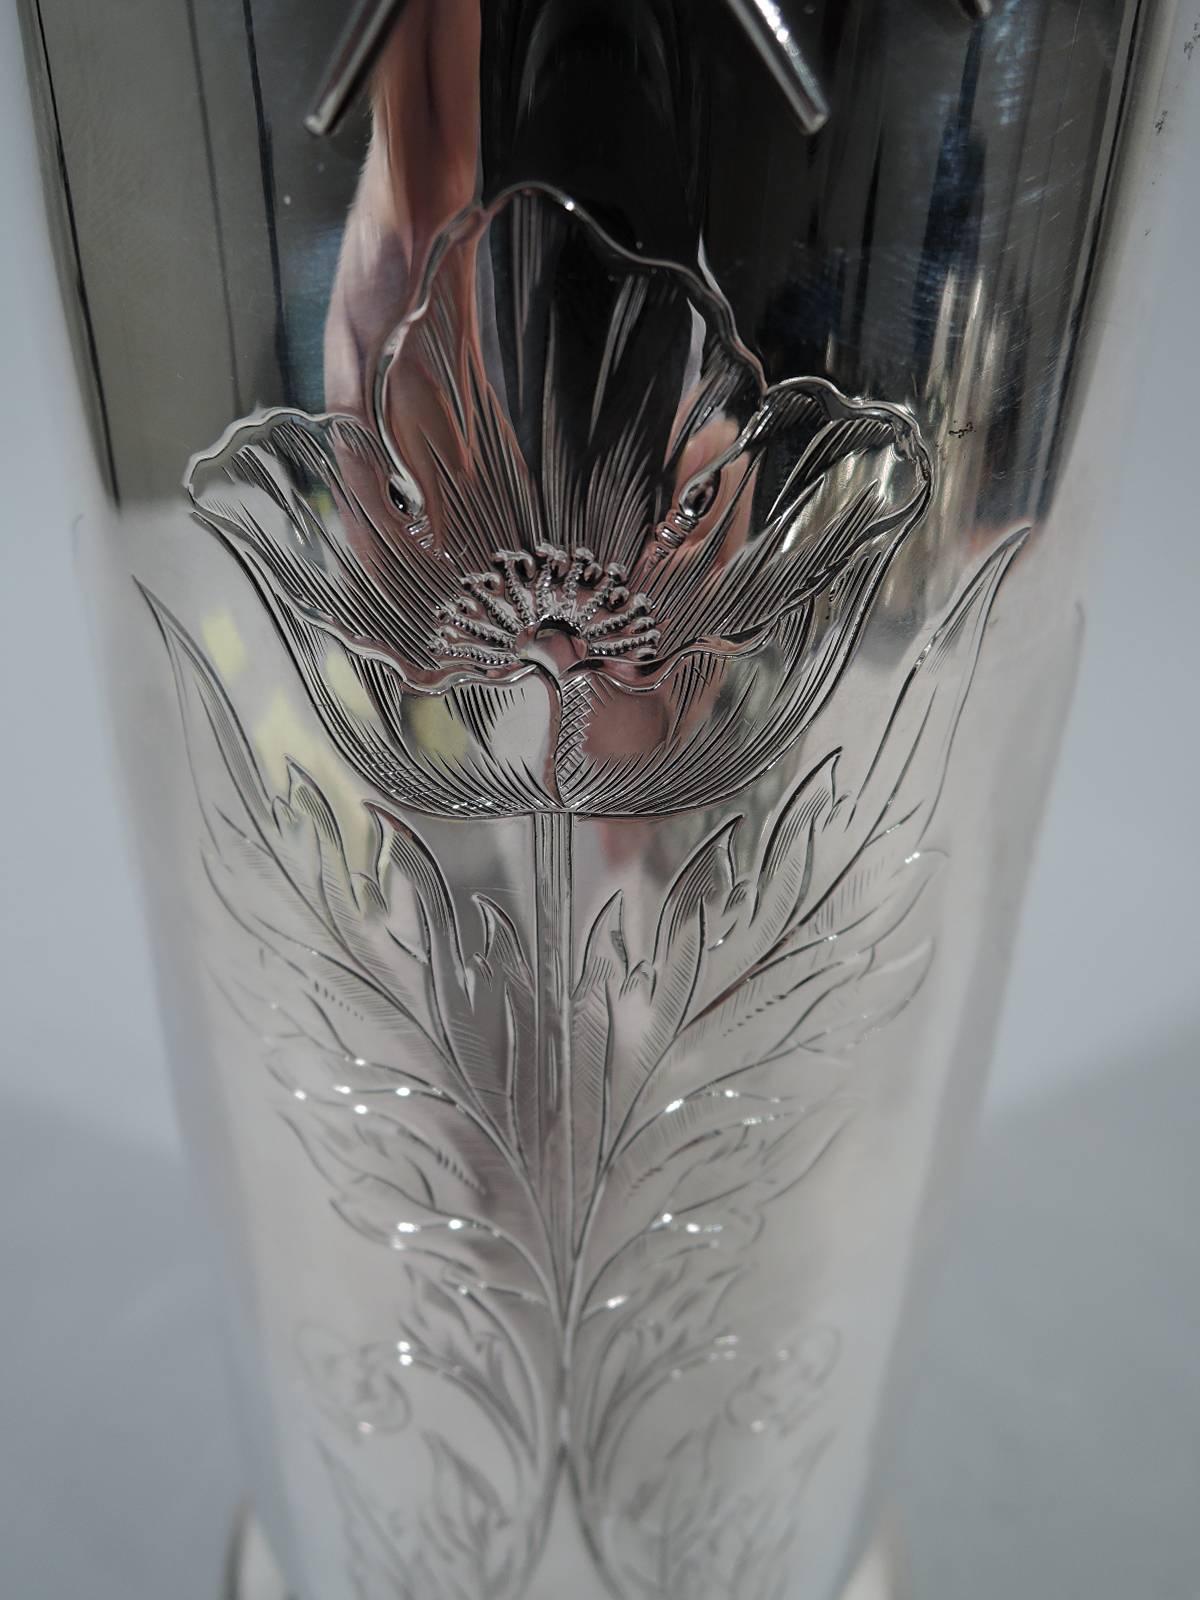 Antique American Art Nouveau Sterling Silver Vase with Enamel Flags 1